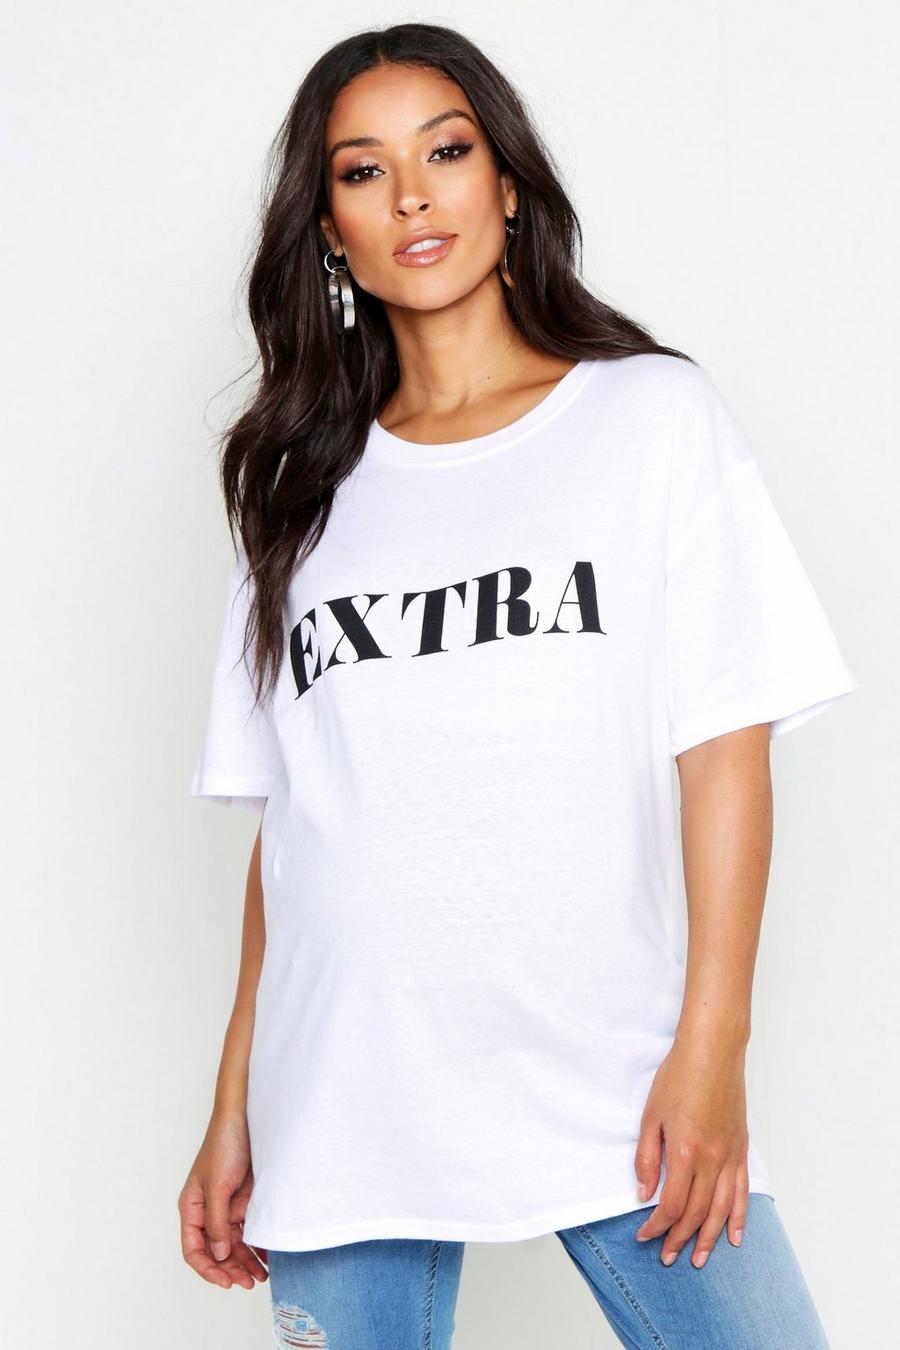 Camiseta con eslogan "Extra" premamá image number 1